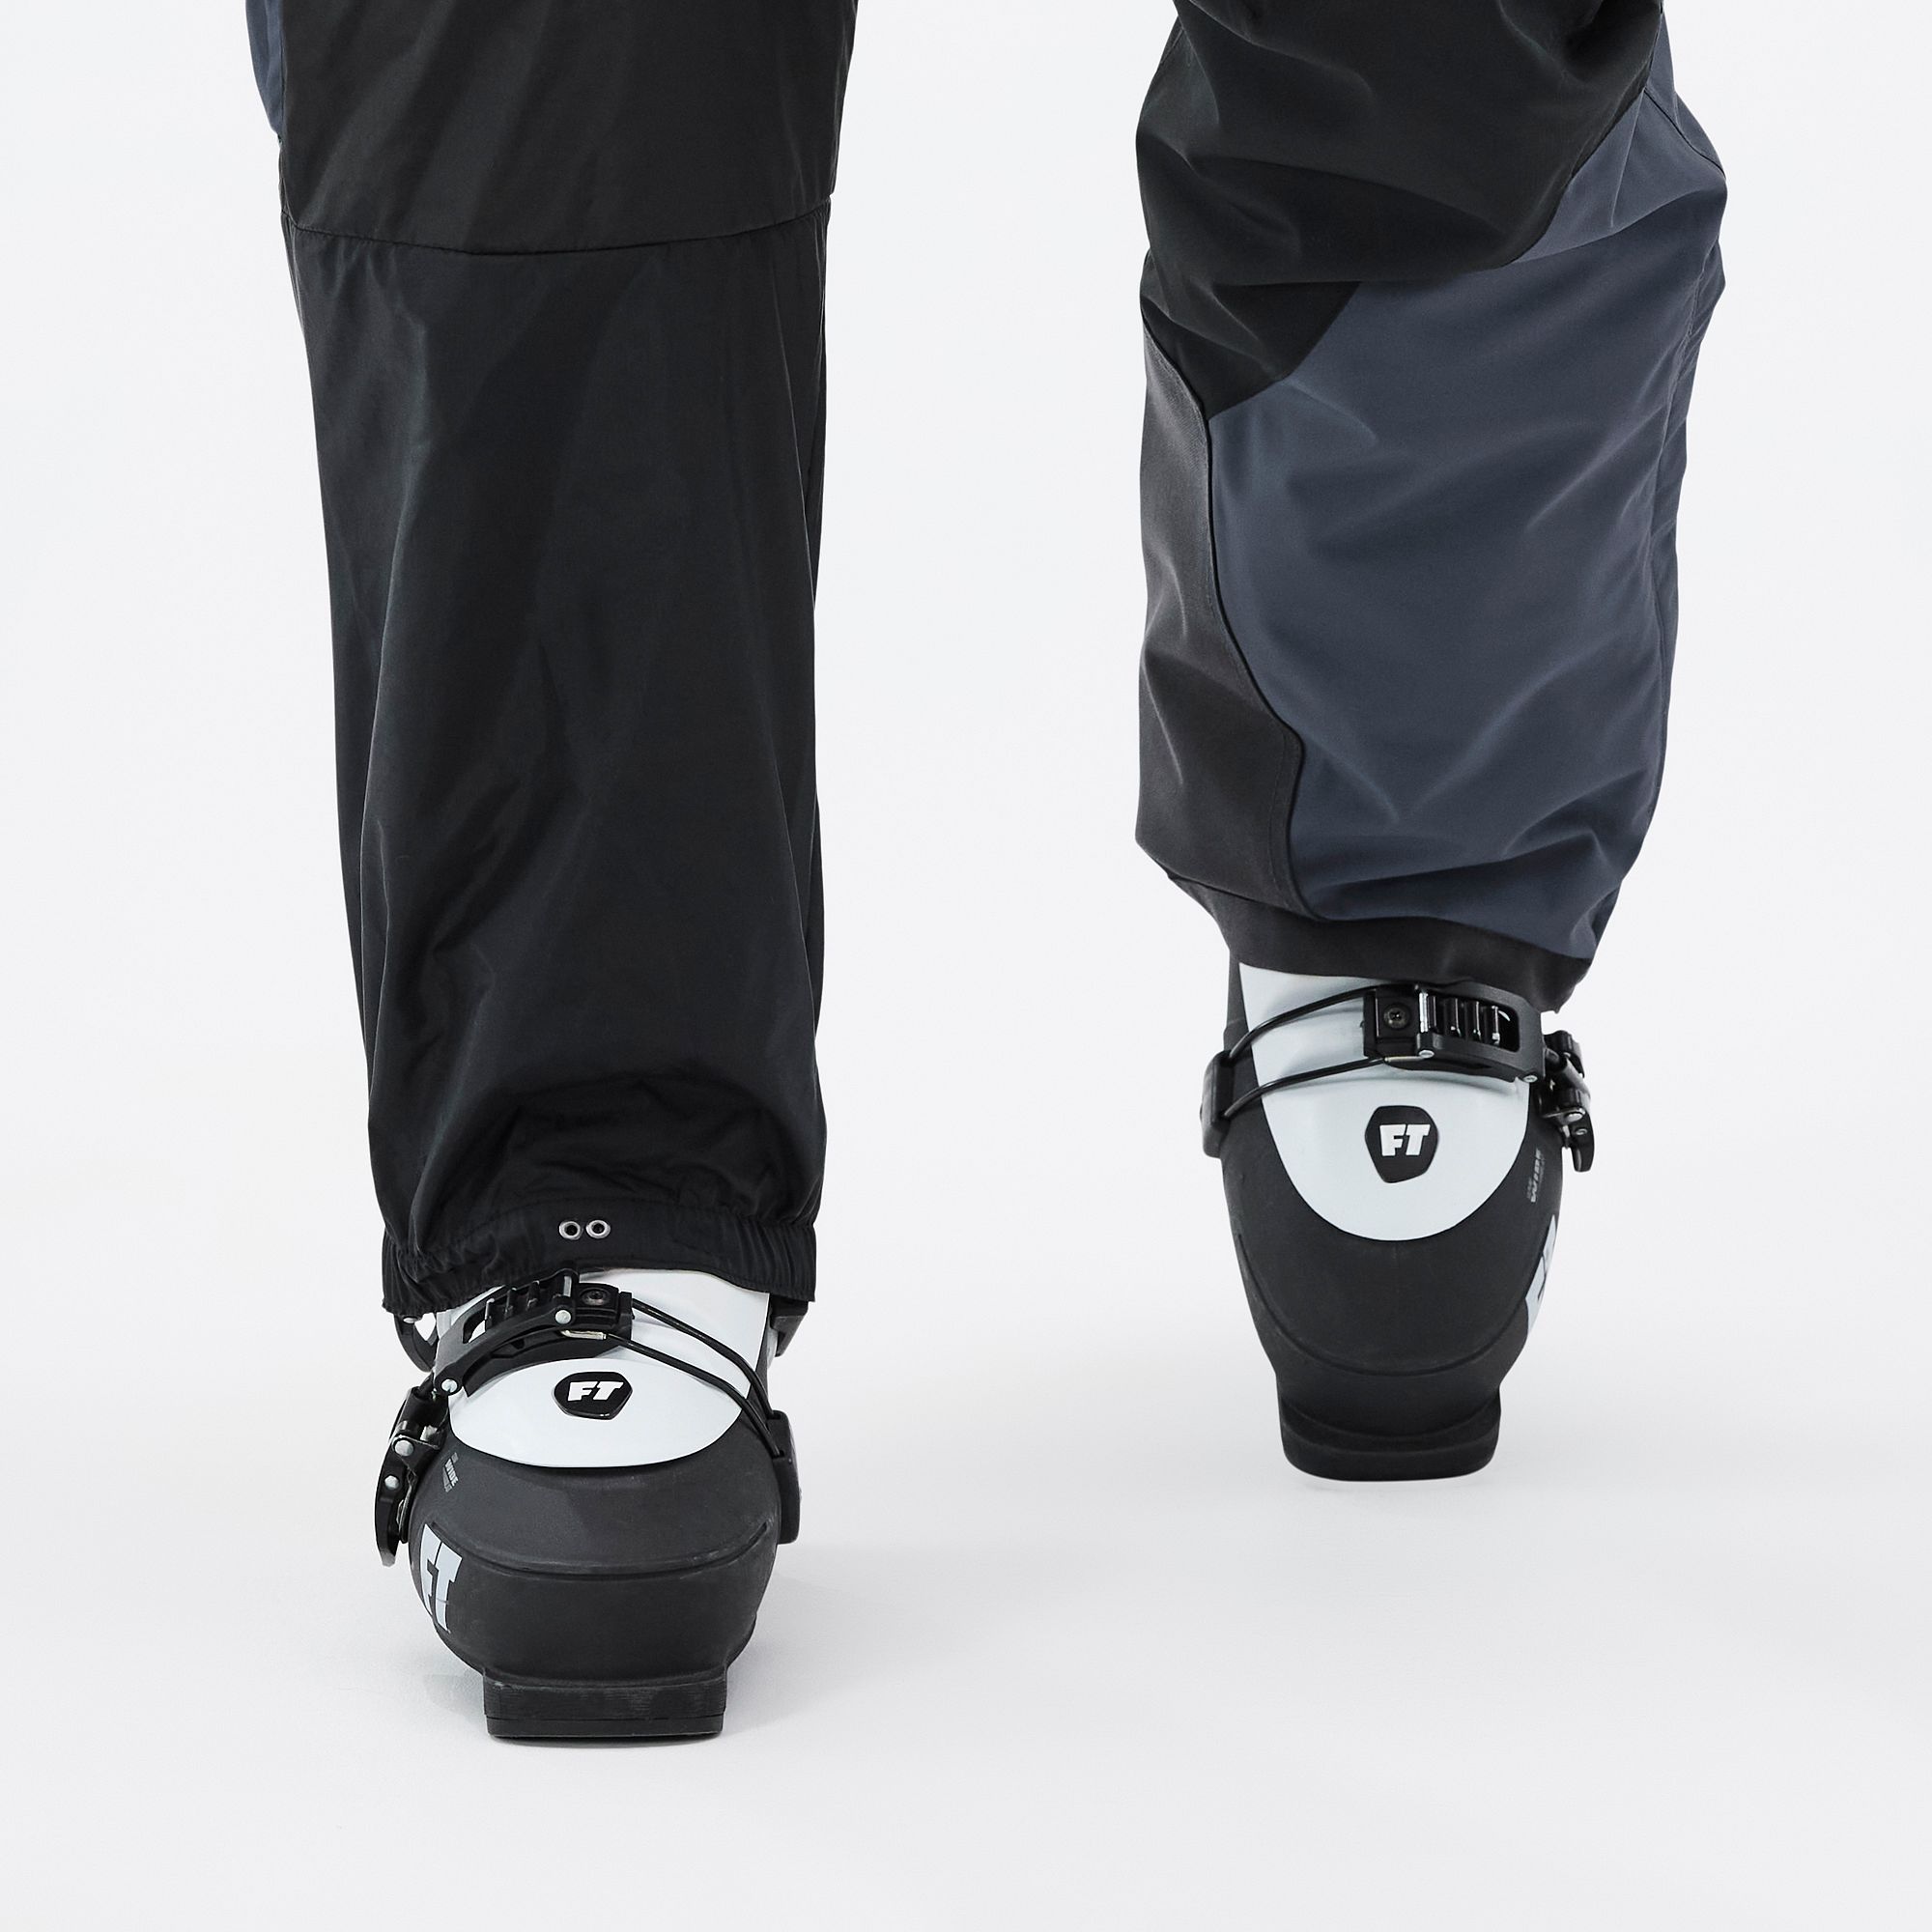 Montec Fawk Ski Pants Men Orange/Black/Metal Blue | Montecwear.com